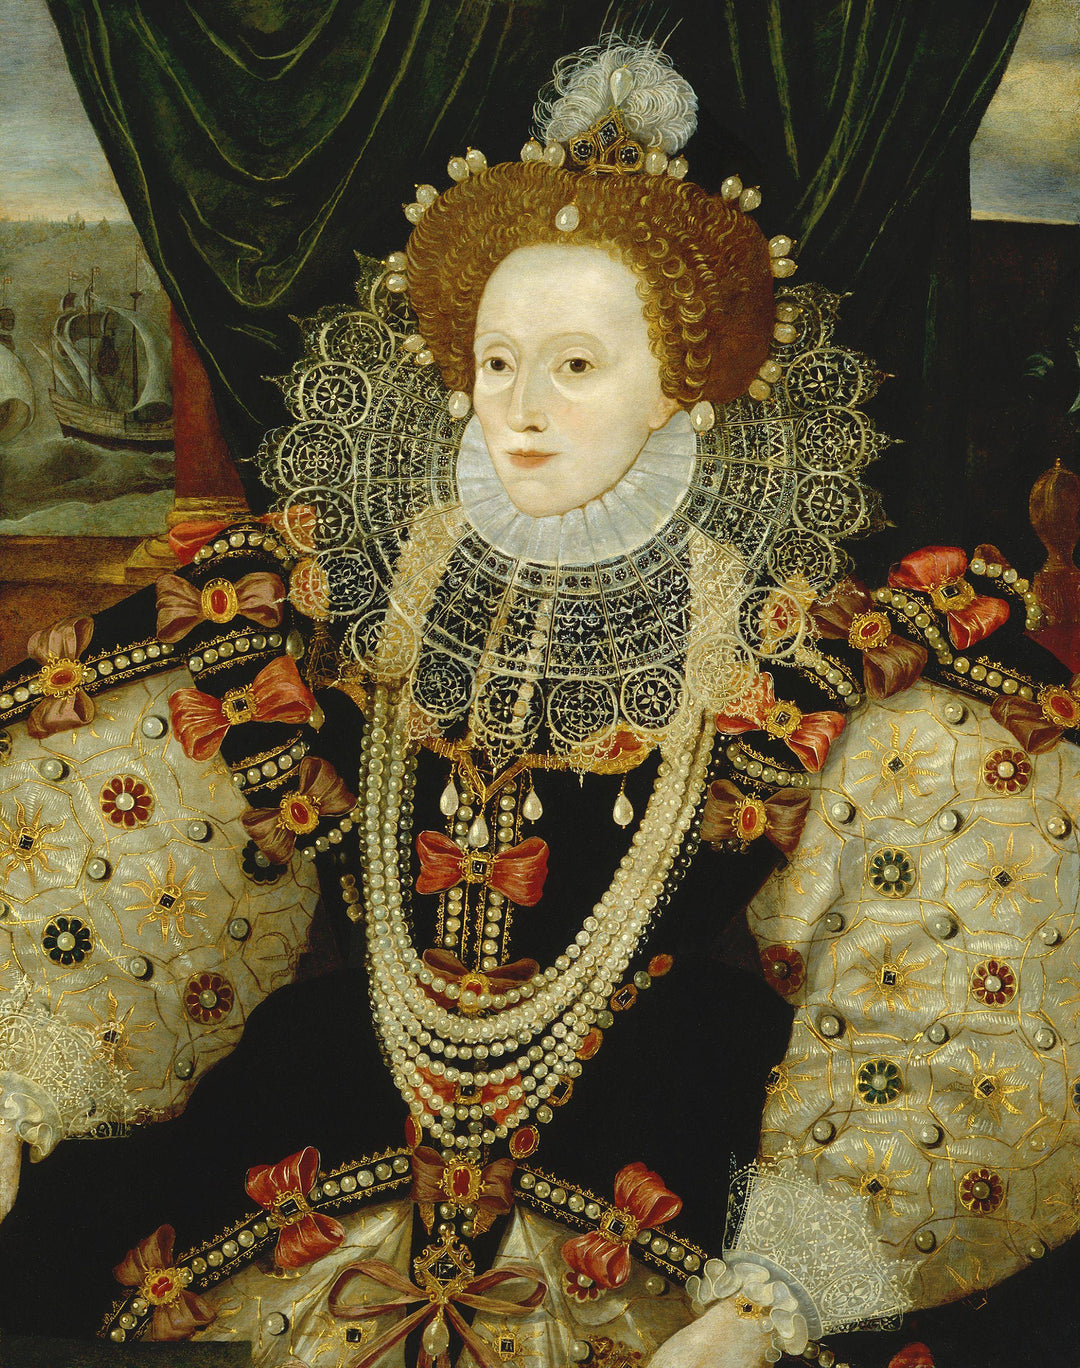 Elizabethan Fashion - A Time of Opulence